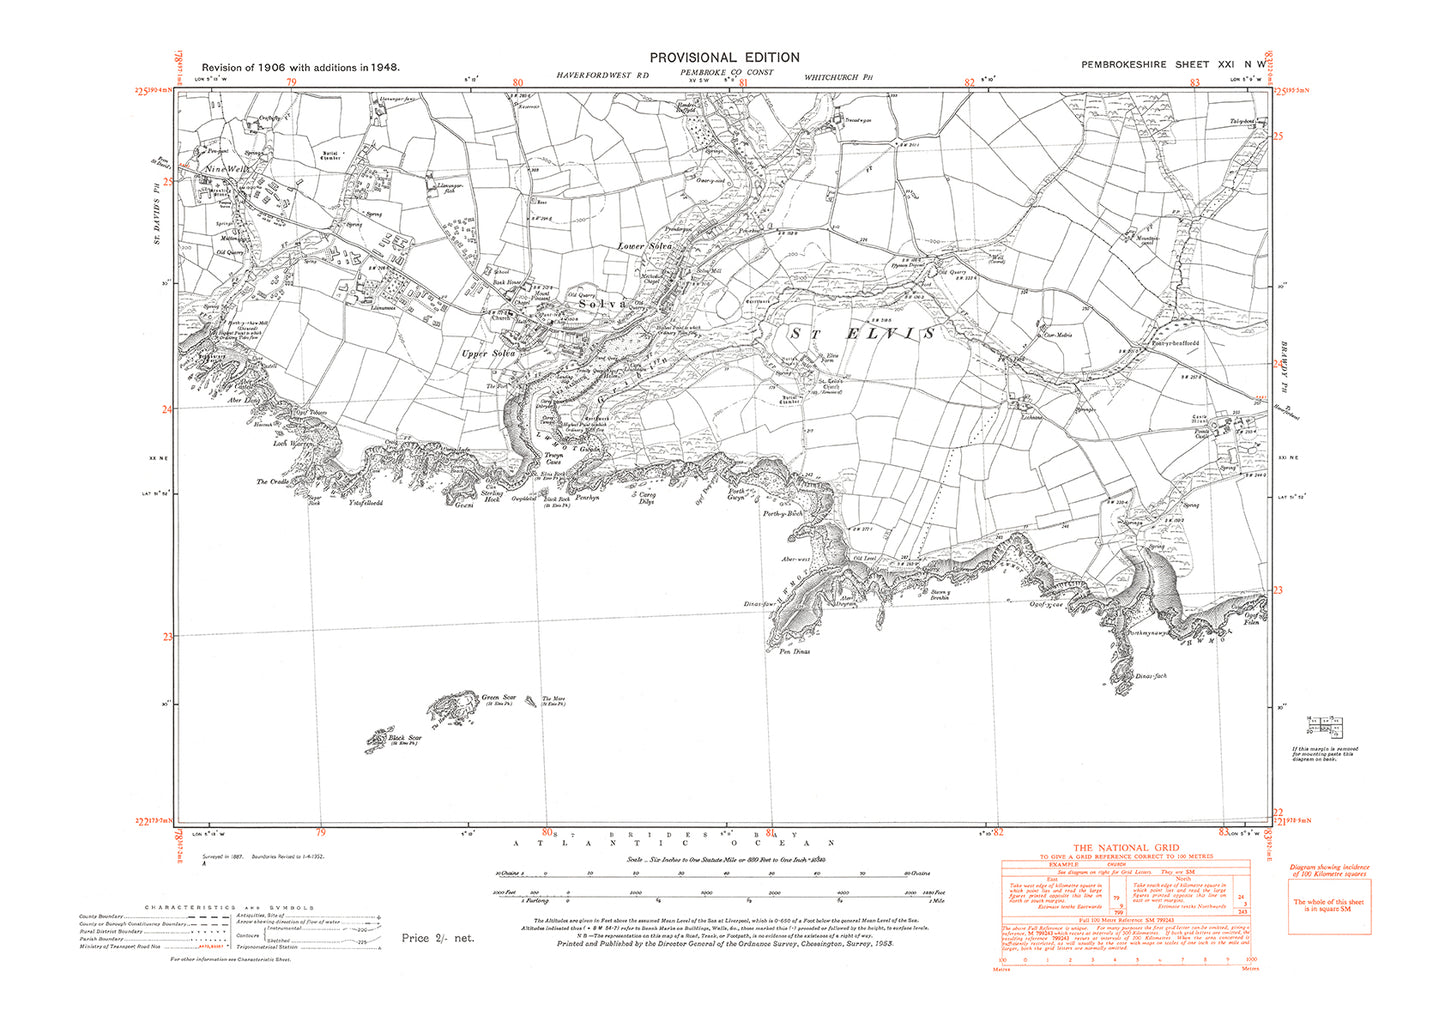 Solva, Nine Wells, old map Pembroke 1948: 21NW